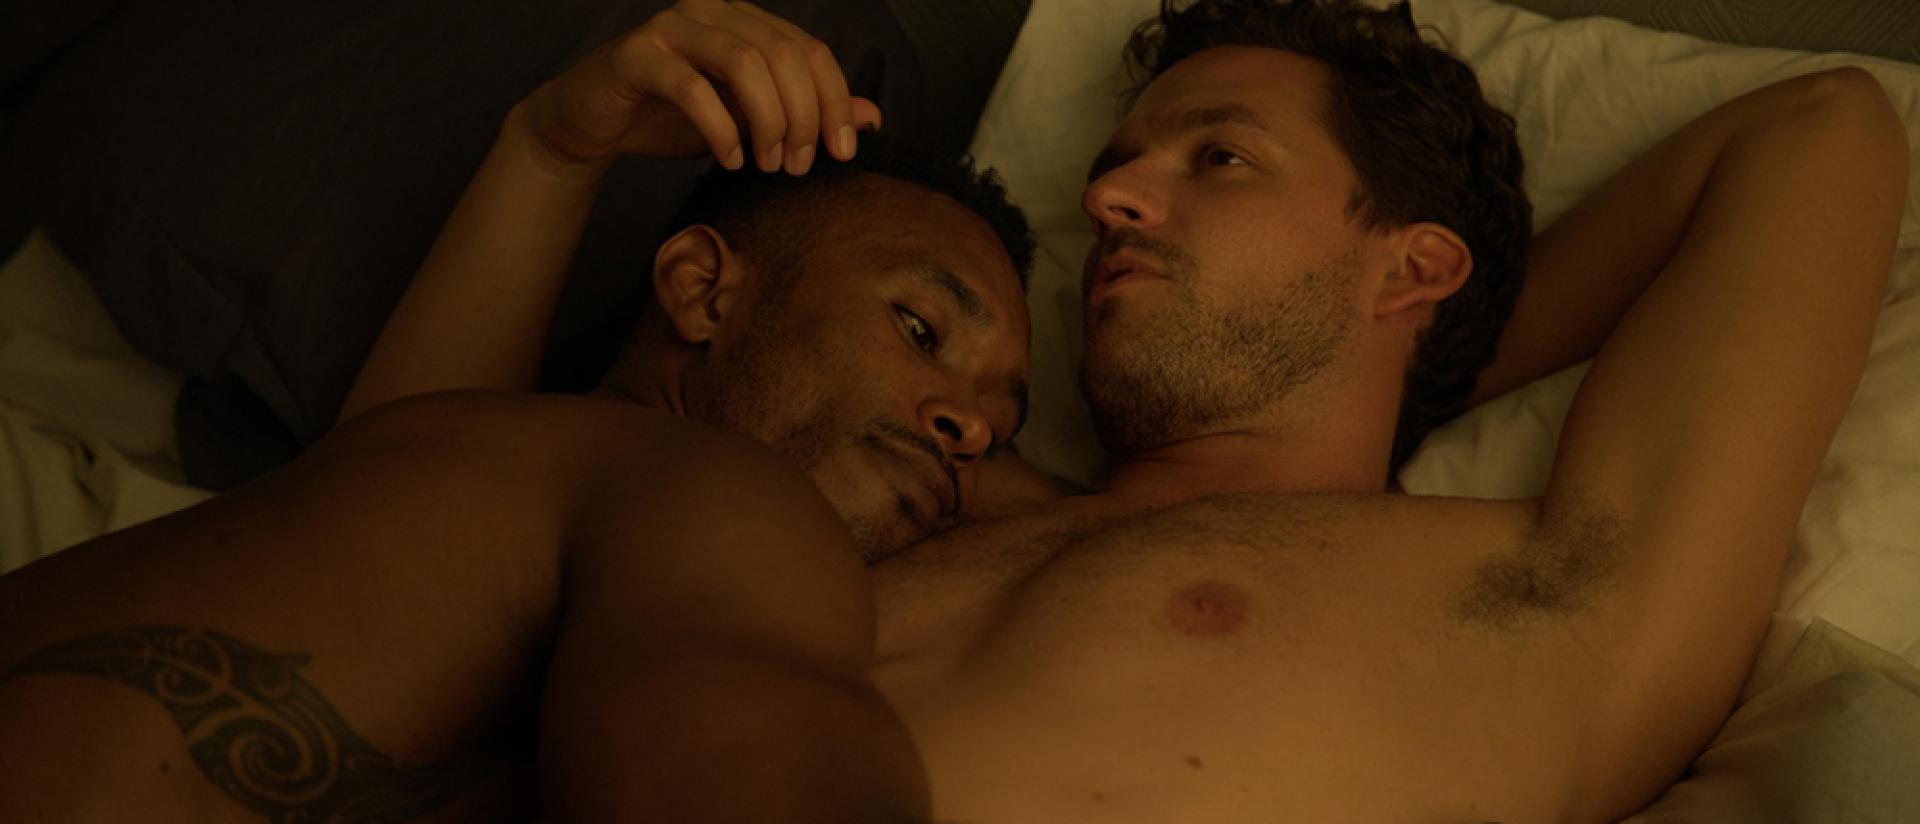 two men hug in bed